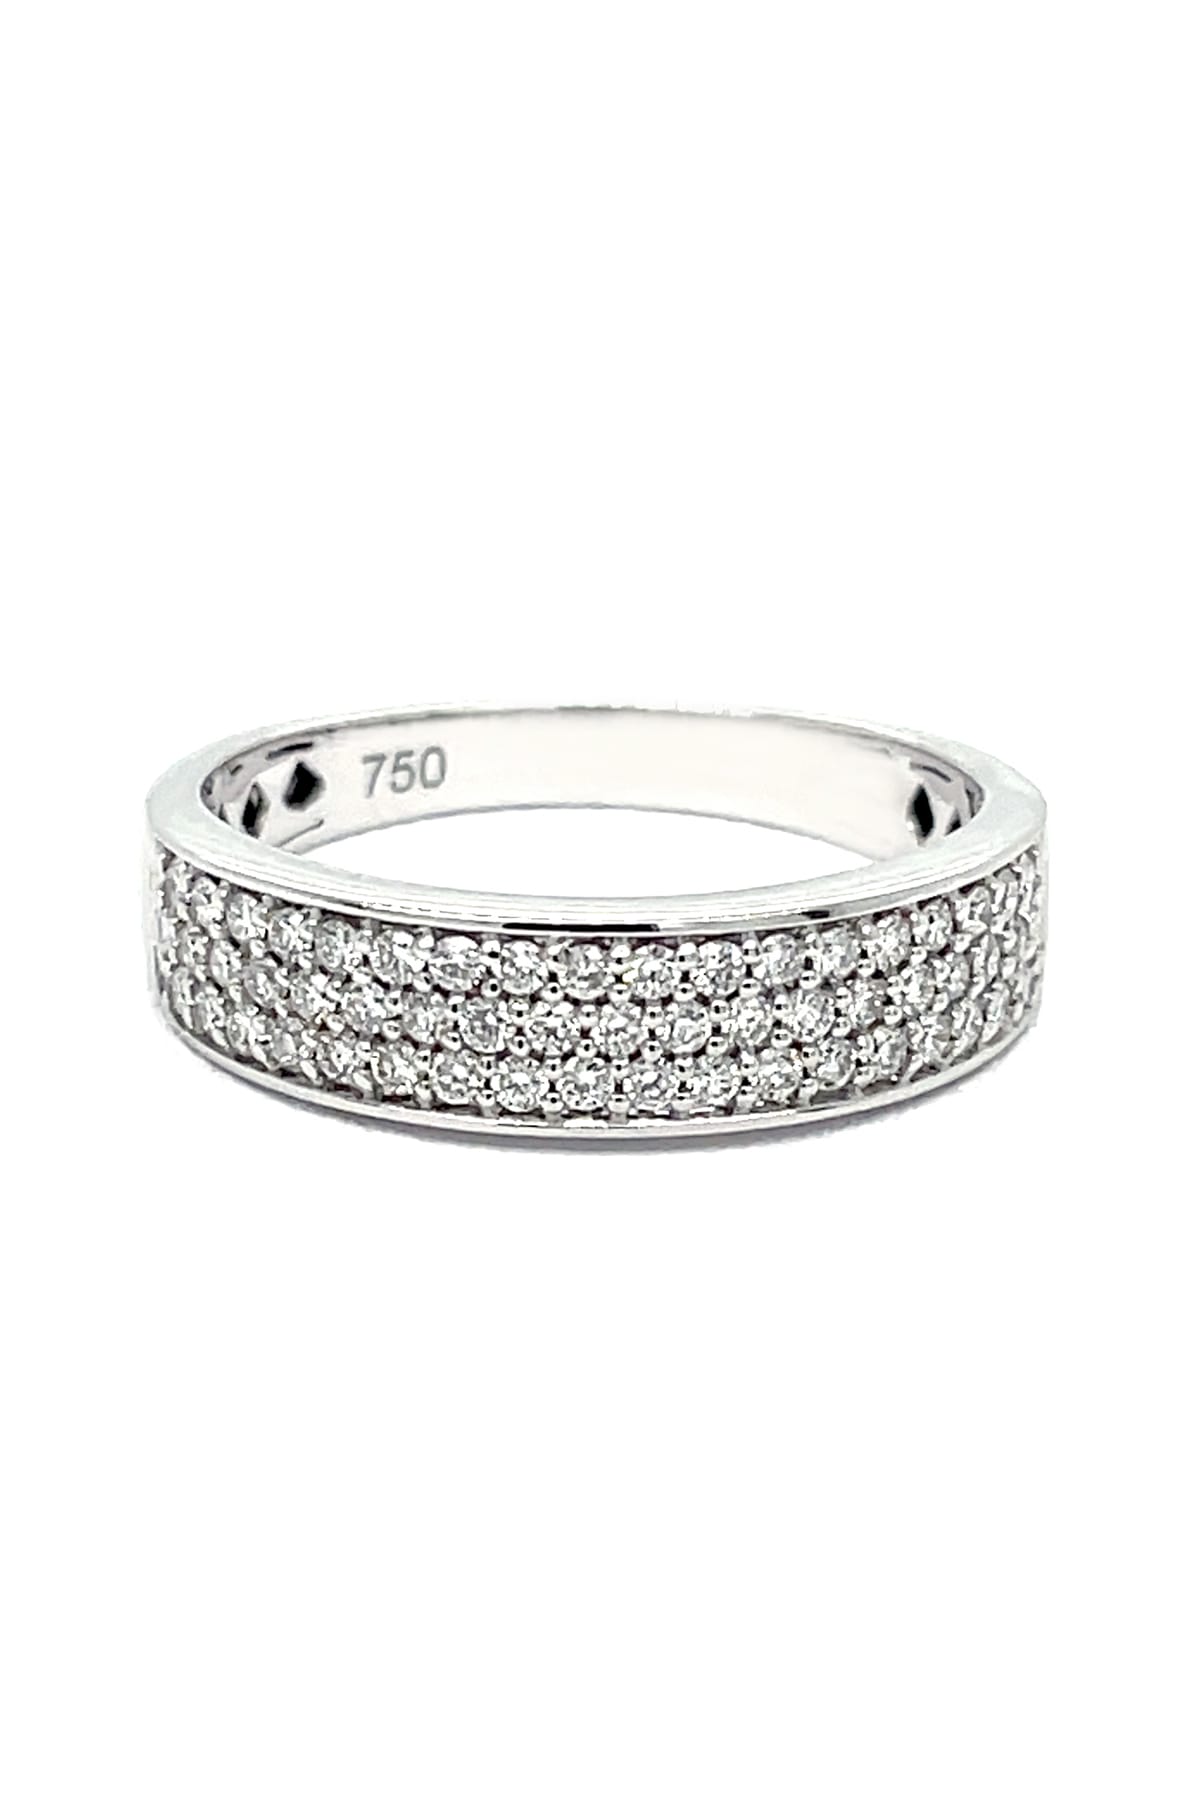 3 Row Diamond Ring available at LeGassick Diamonds and Jewellery Gold Coast, Australia.